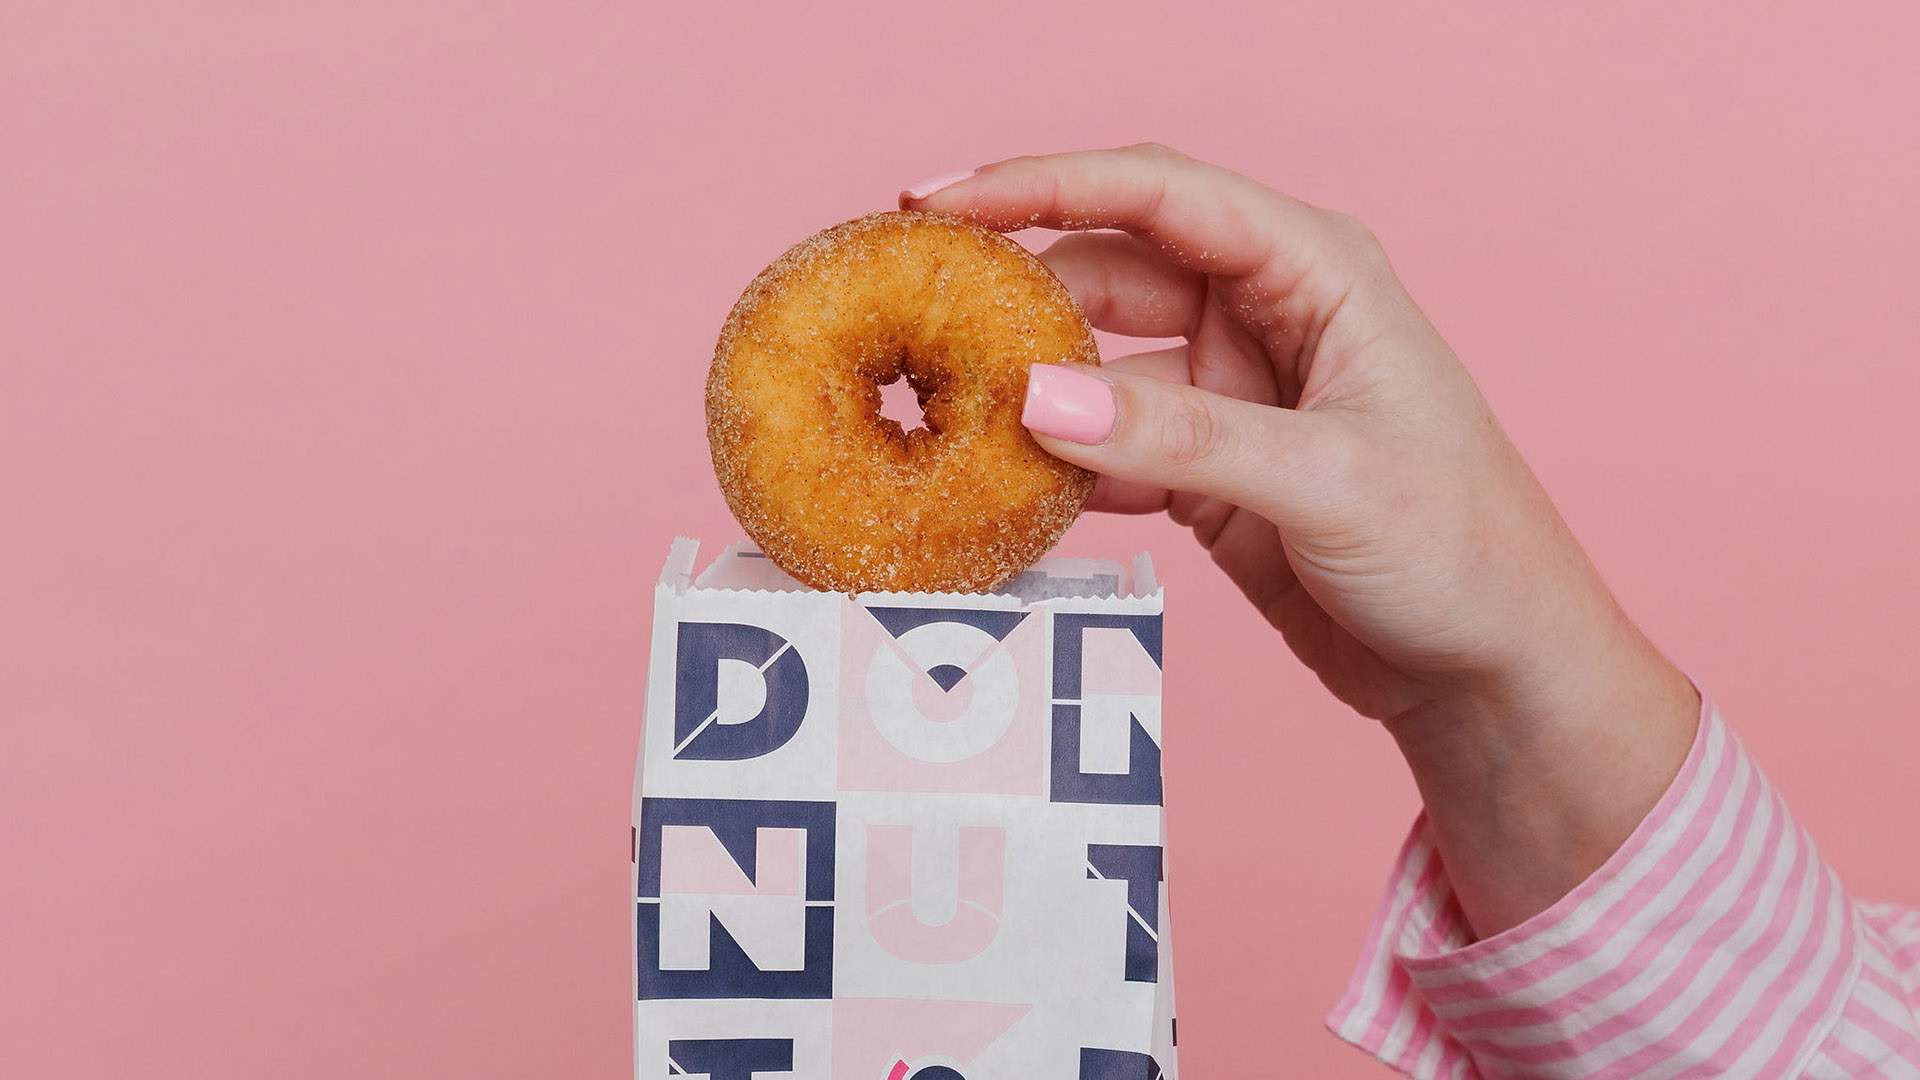 Freebie Alert: Donut King Is Giving Away Free Hot Cinnamon Doughnuts Today